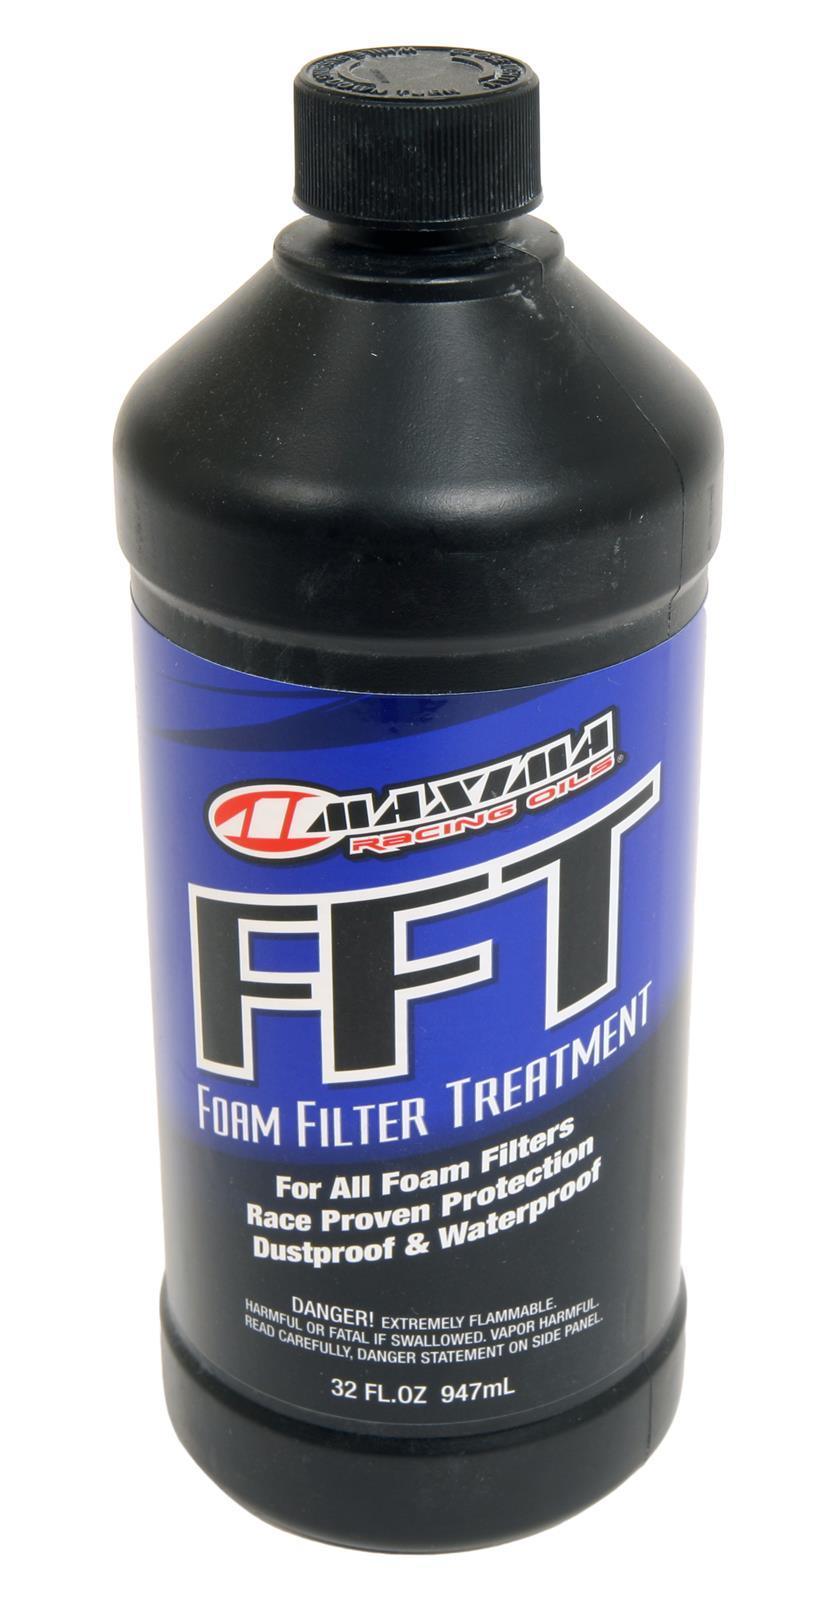 FFT Foam Filter Oil Trea tment 32oz. - Burlile Performance Products